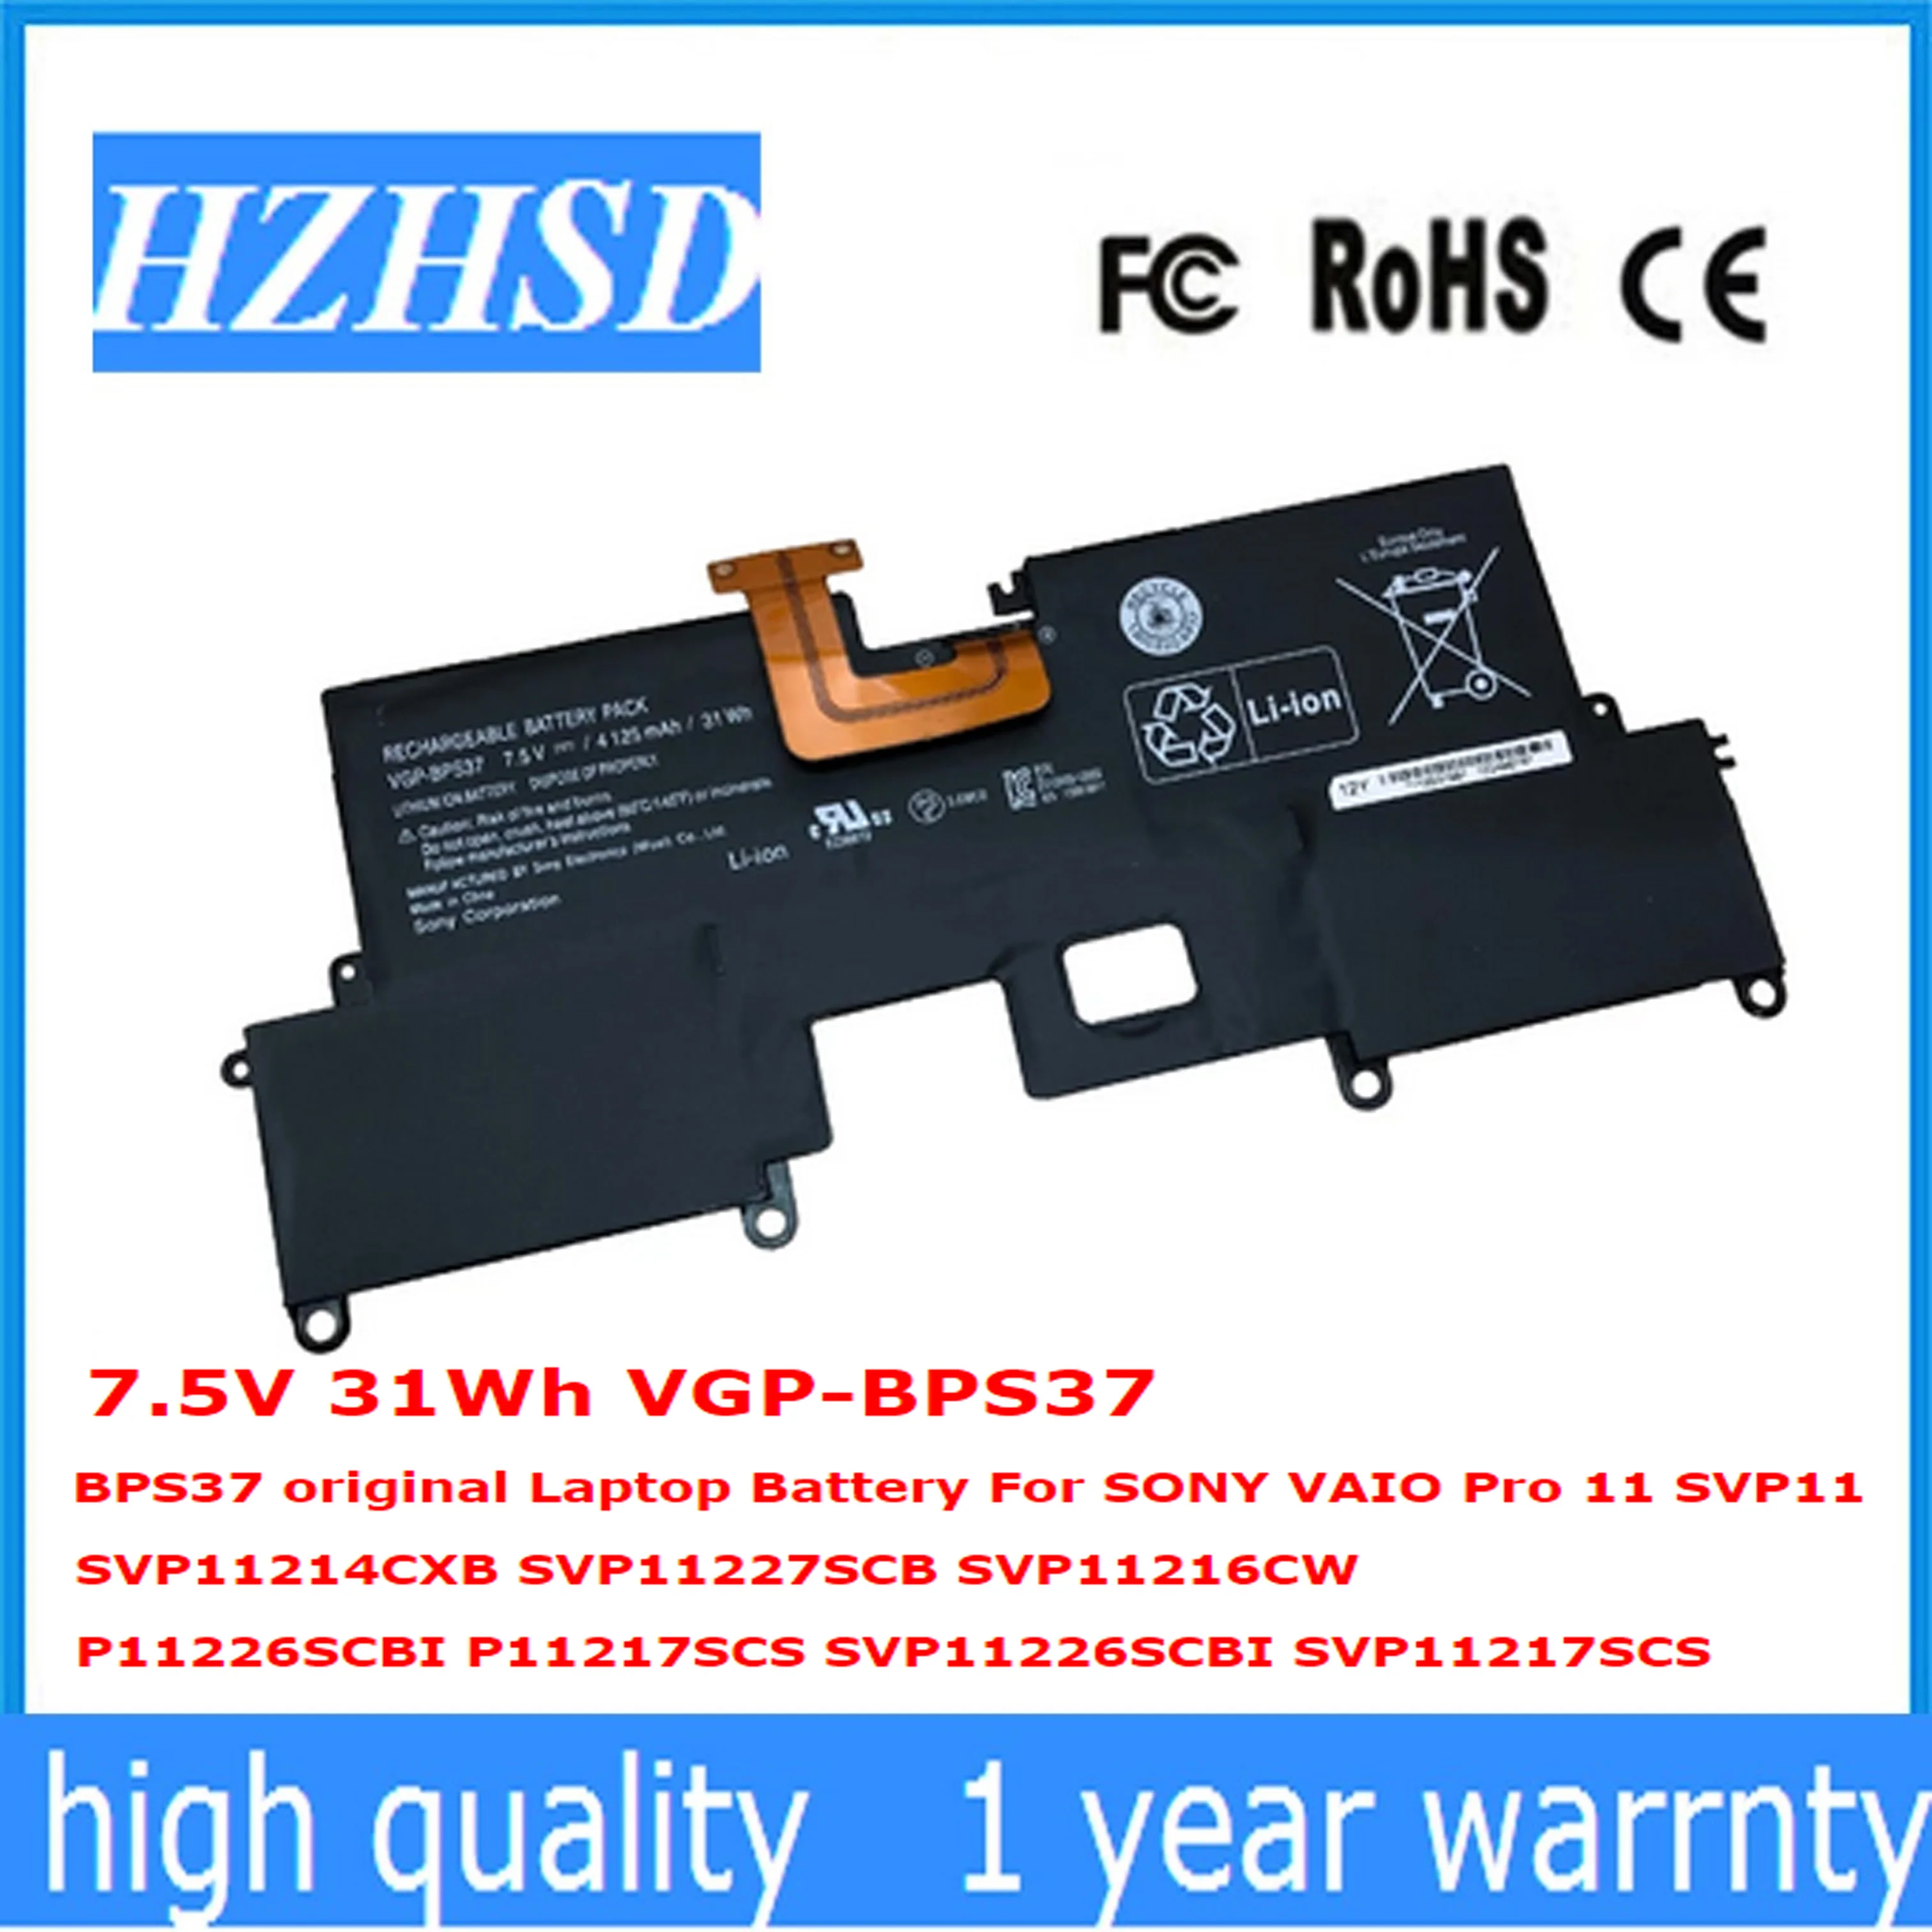 

7.5V 31Wh VGP-BPS37 BPS37 original Laptop Battery For SONY VAIO Pro 11 SVP11 SVP11214CXB SVP11227SCB SVP11216CW P11226SCBI